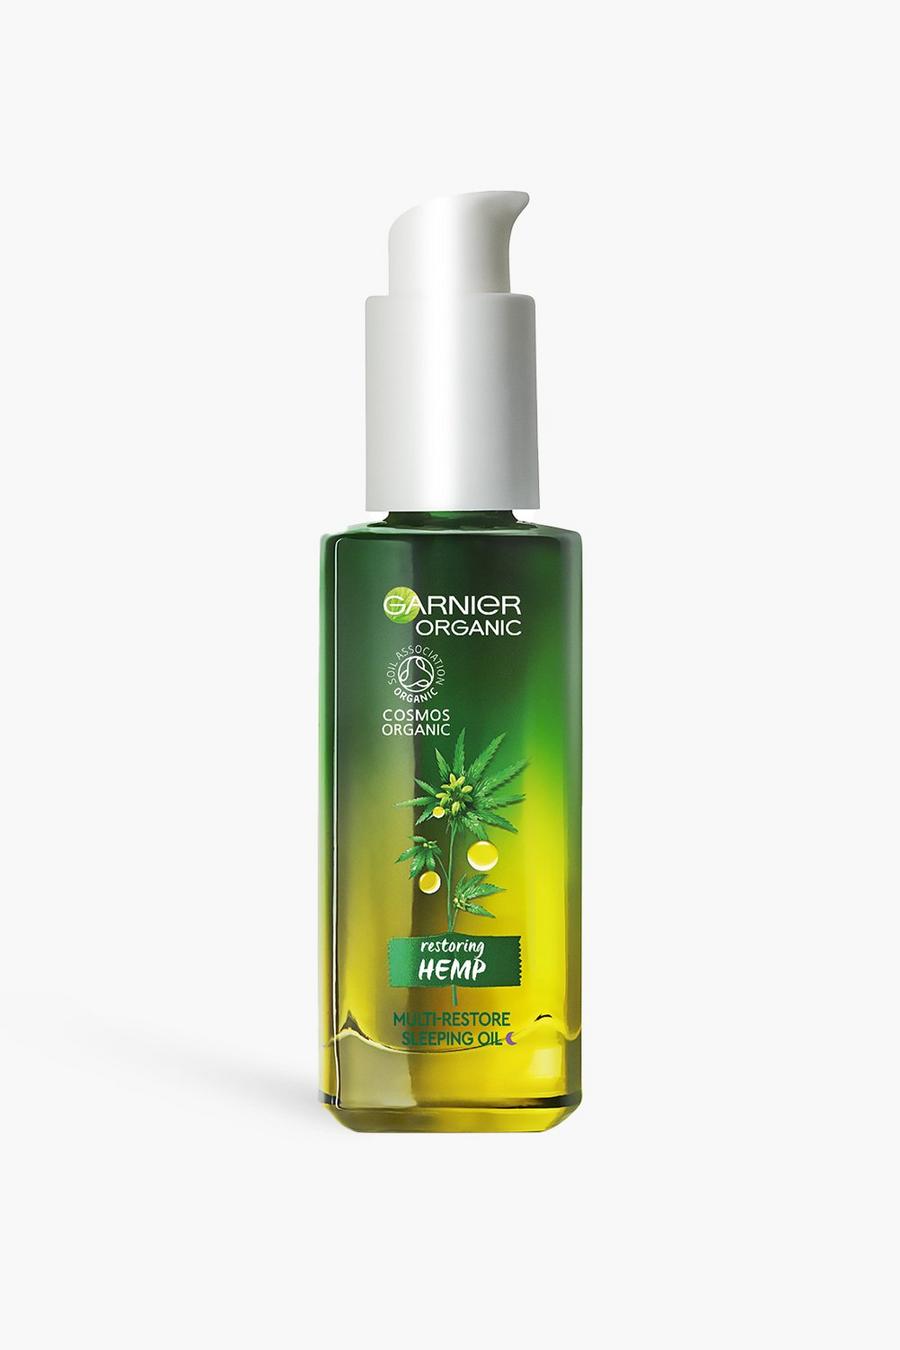 Green gerde Garnier Organic Hemp Multi-Restore Night Sleeping Oil 30ml